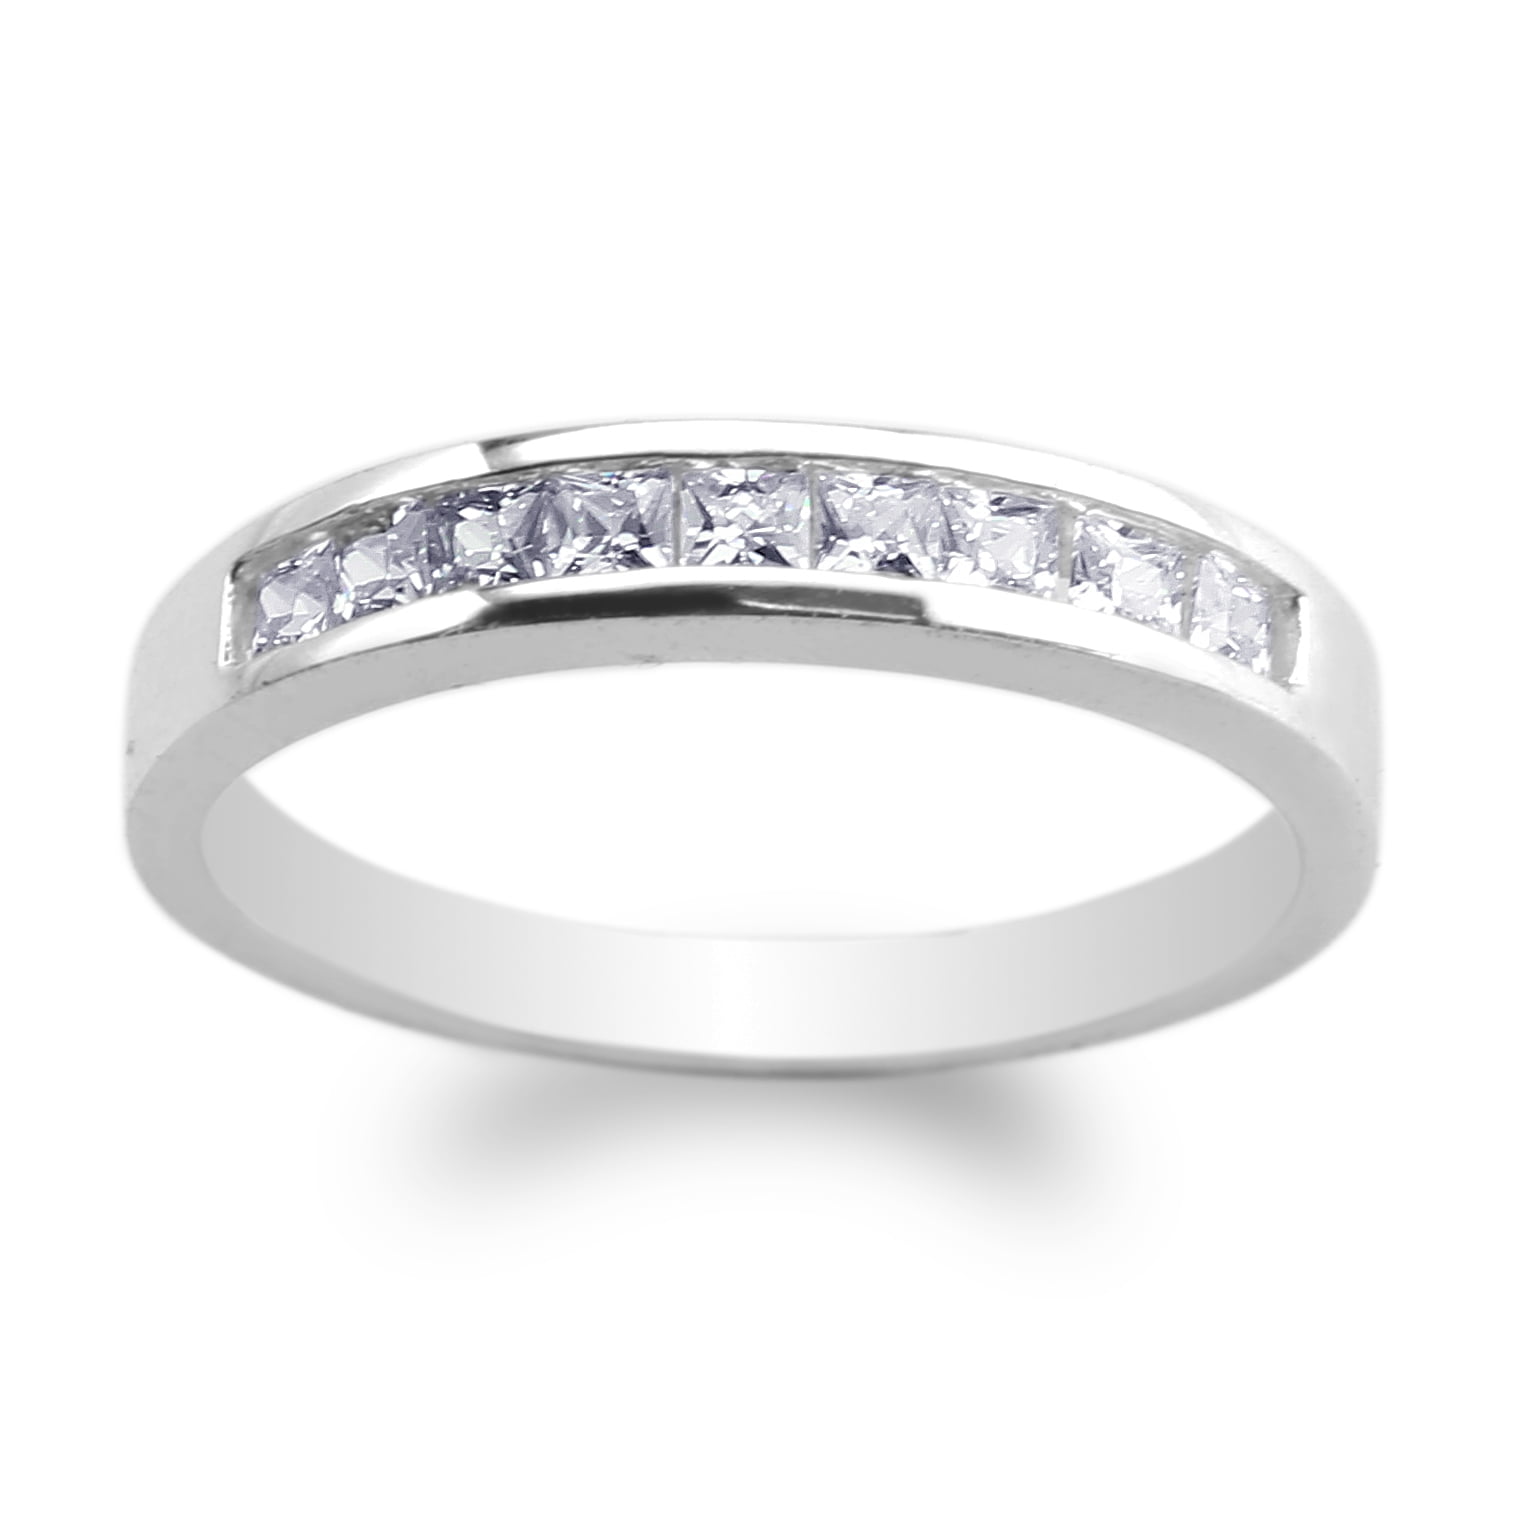 Sterling Silver 925 Princess Cut Channel Set CZ Eternity Wedding Band Ring 4-10 